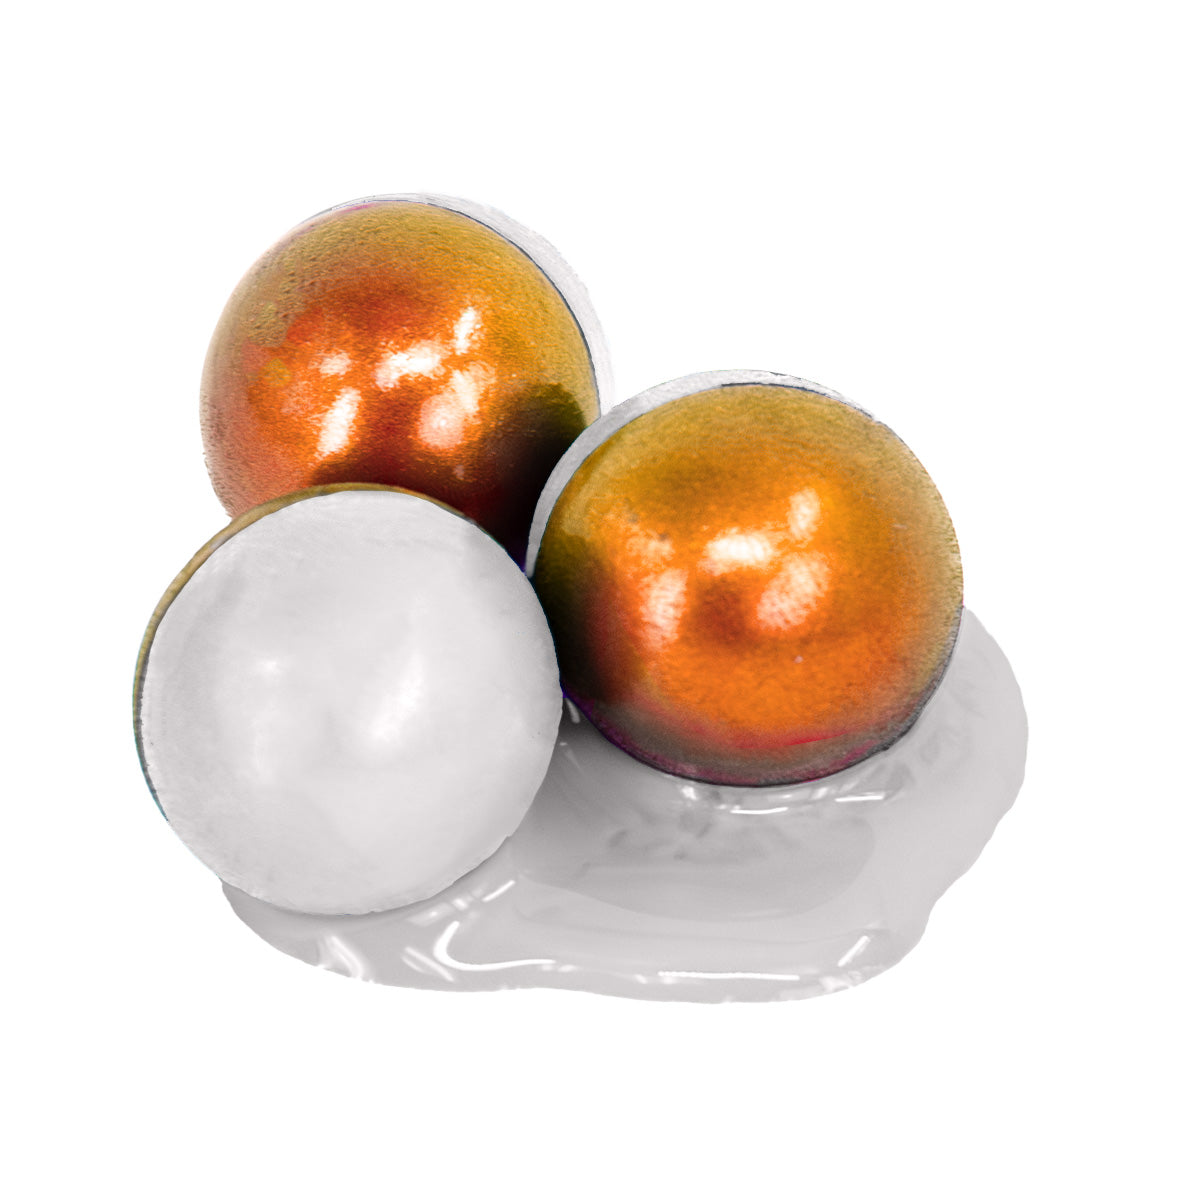 Valken Merica® 2-Tone Metallic 0.68 Cal Paintballs - 2000 Count Metallic Orange/White Shell - White Fill